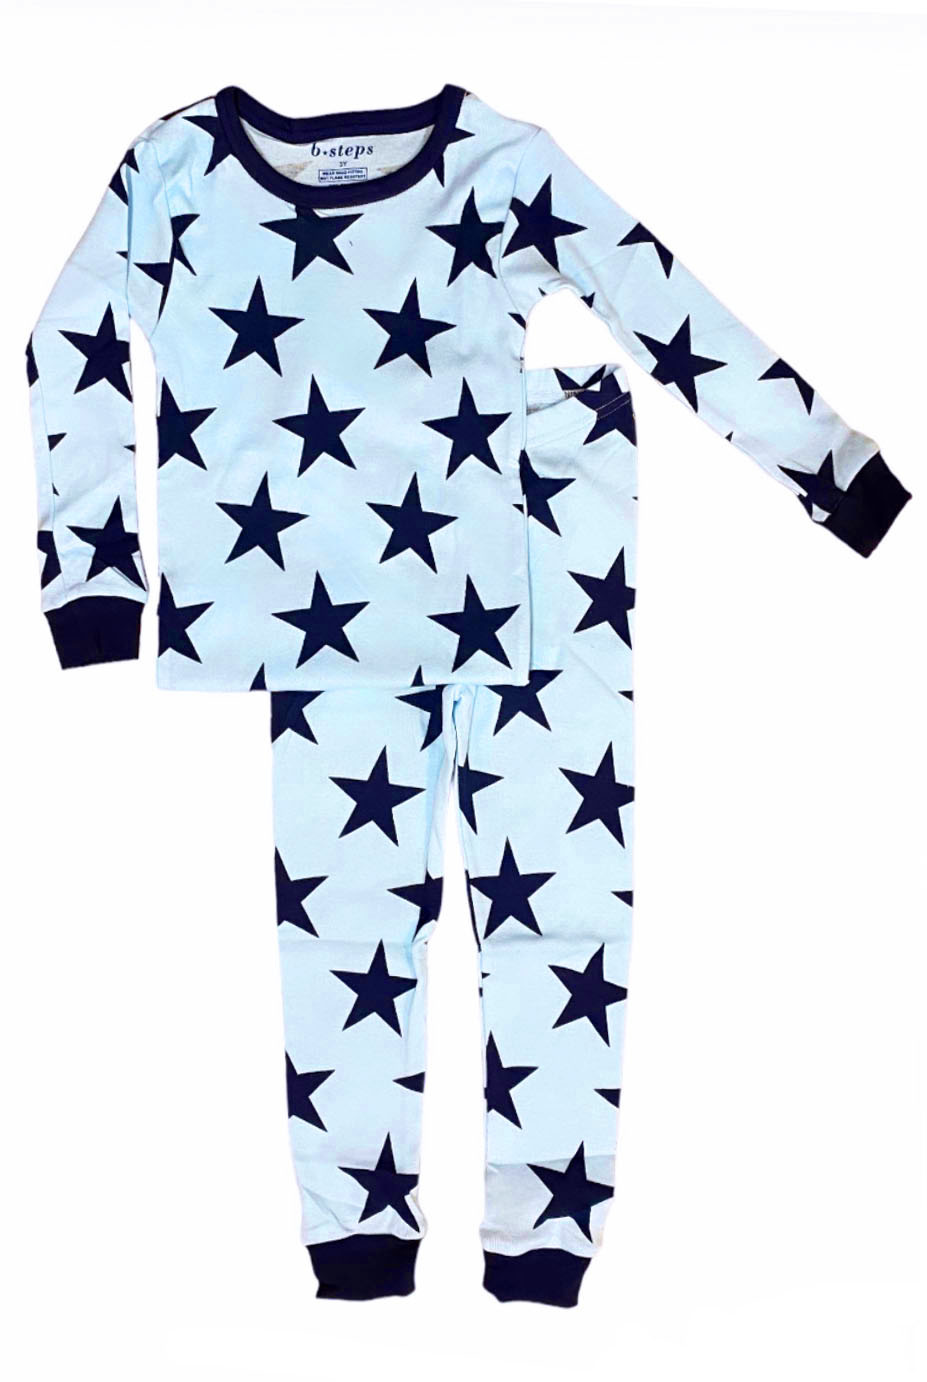 Baby Steps Large Blue Star PJ Set